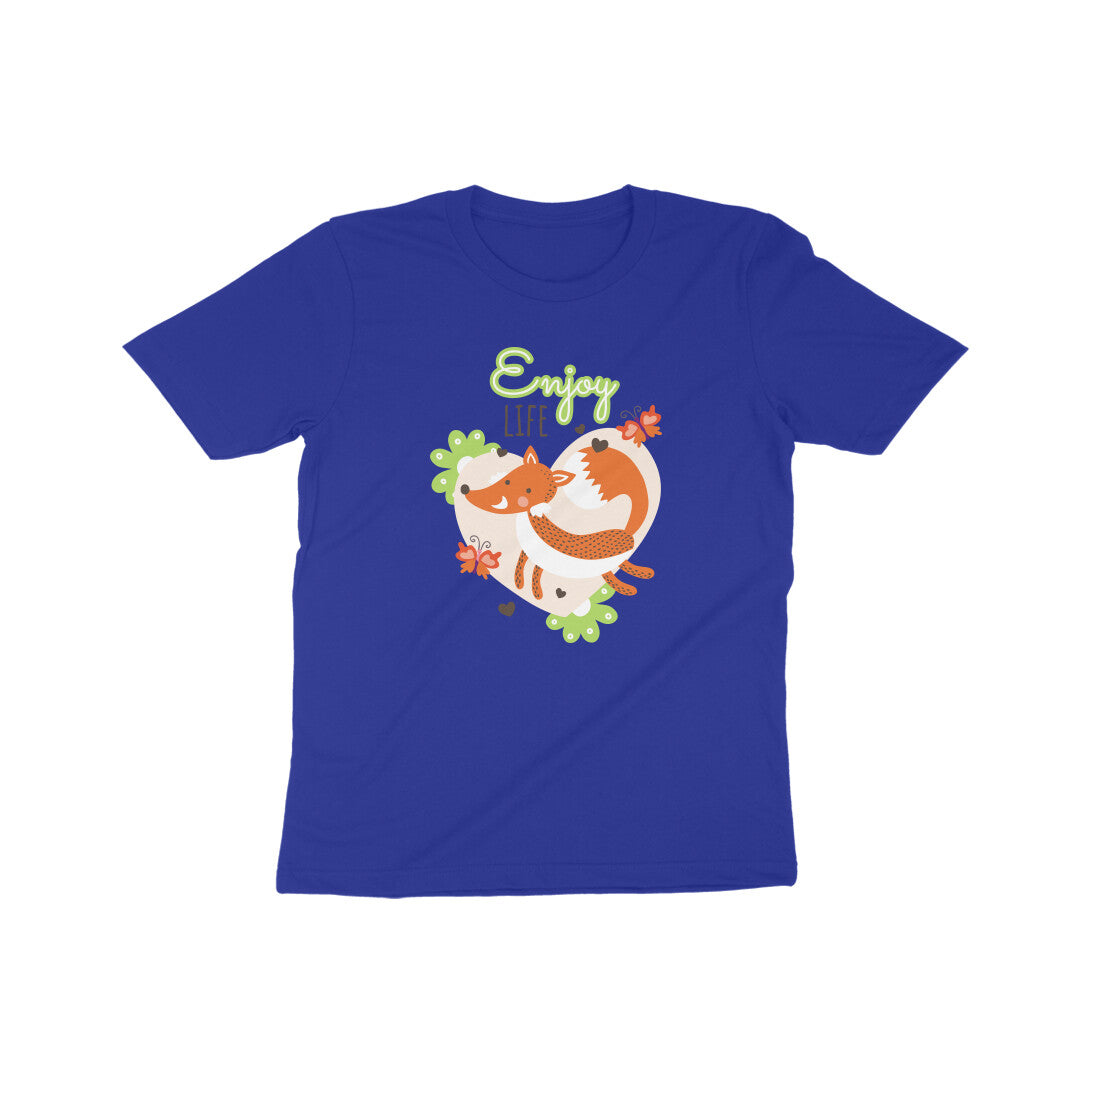 Enjoy Life Kids T-Shirt